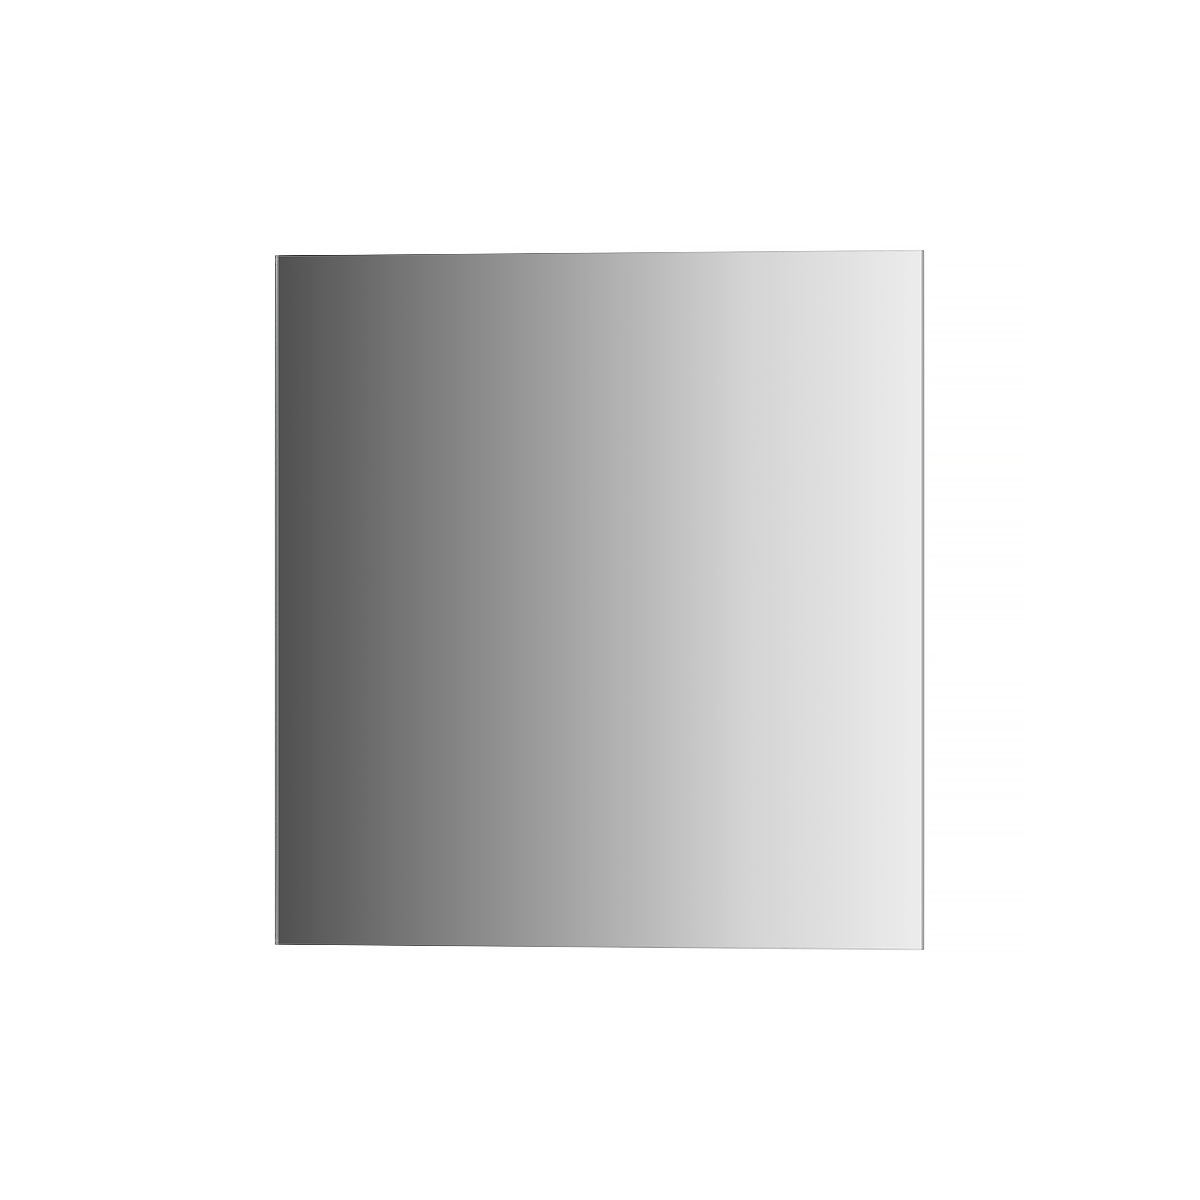 Зеркальная плитка со шлифованной кромкой  Evoform BY 1407 25x25см зеркальная плитка mirox 3g sensea nnlm20 квадратная 20x20 см глянцевая серебро 4 шт